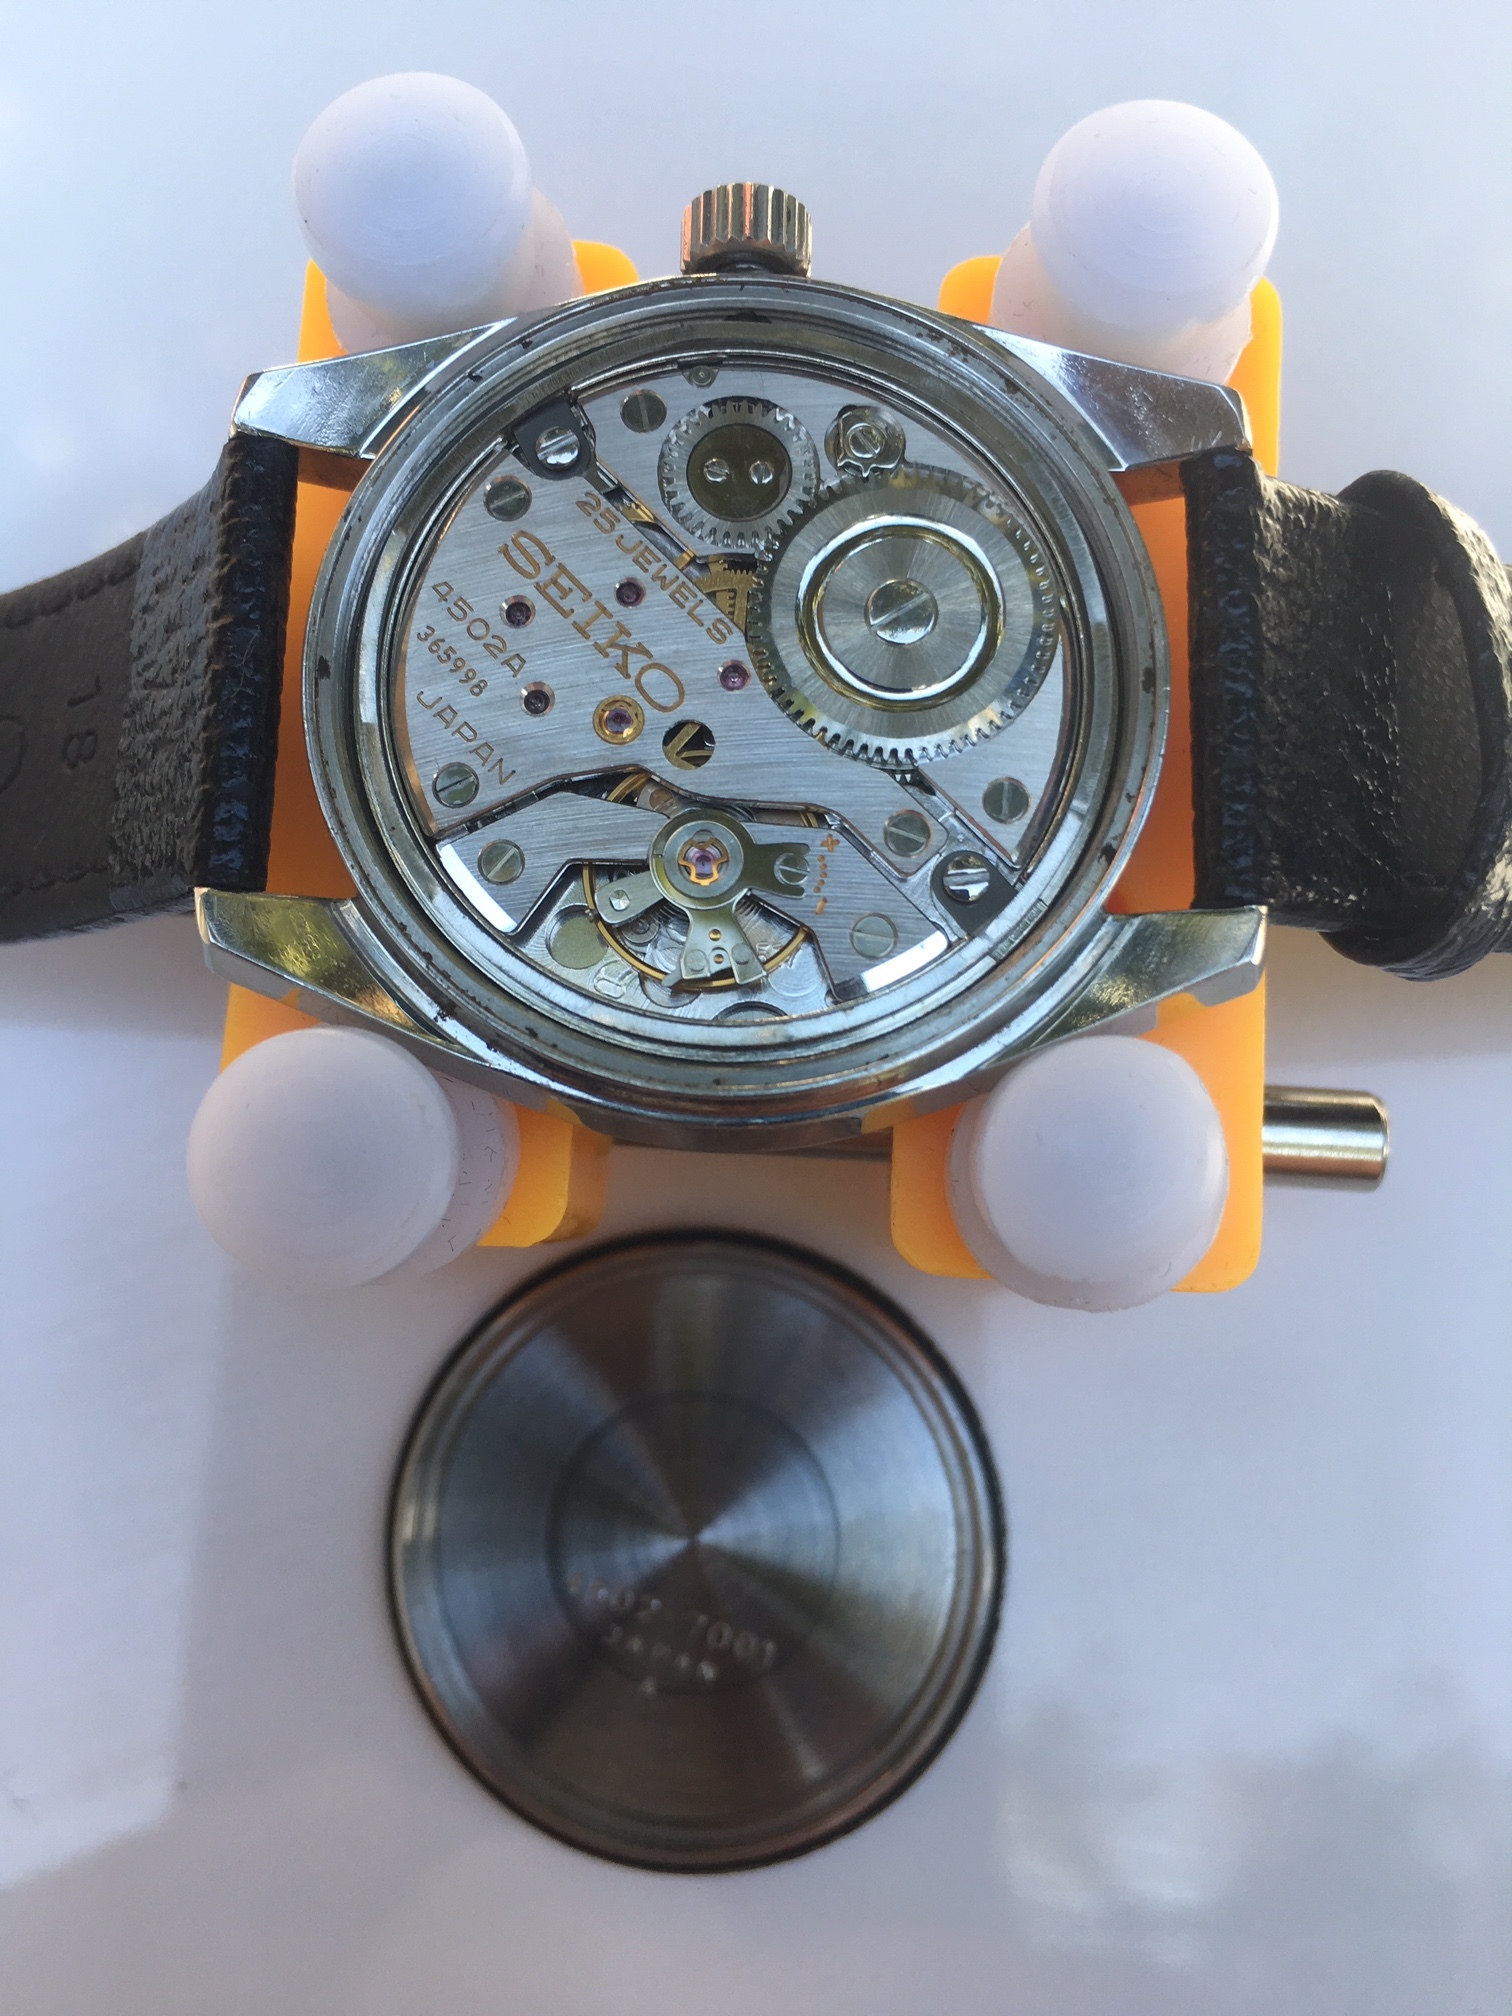 King Seiko 4502A-7001 - Awesome Watch!!! | WatchCharts